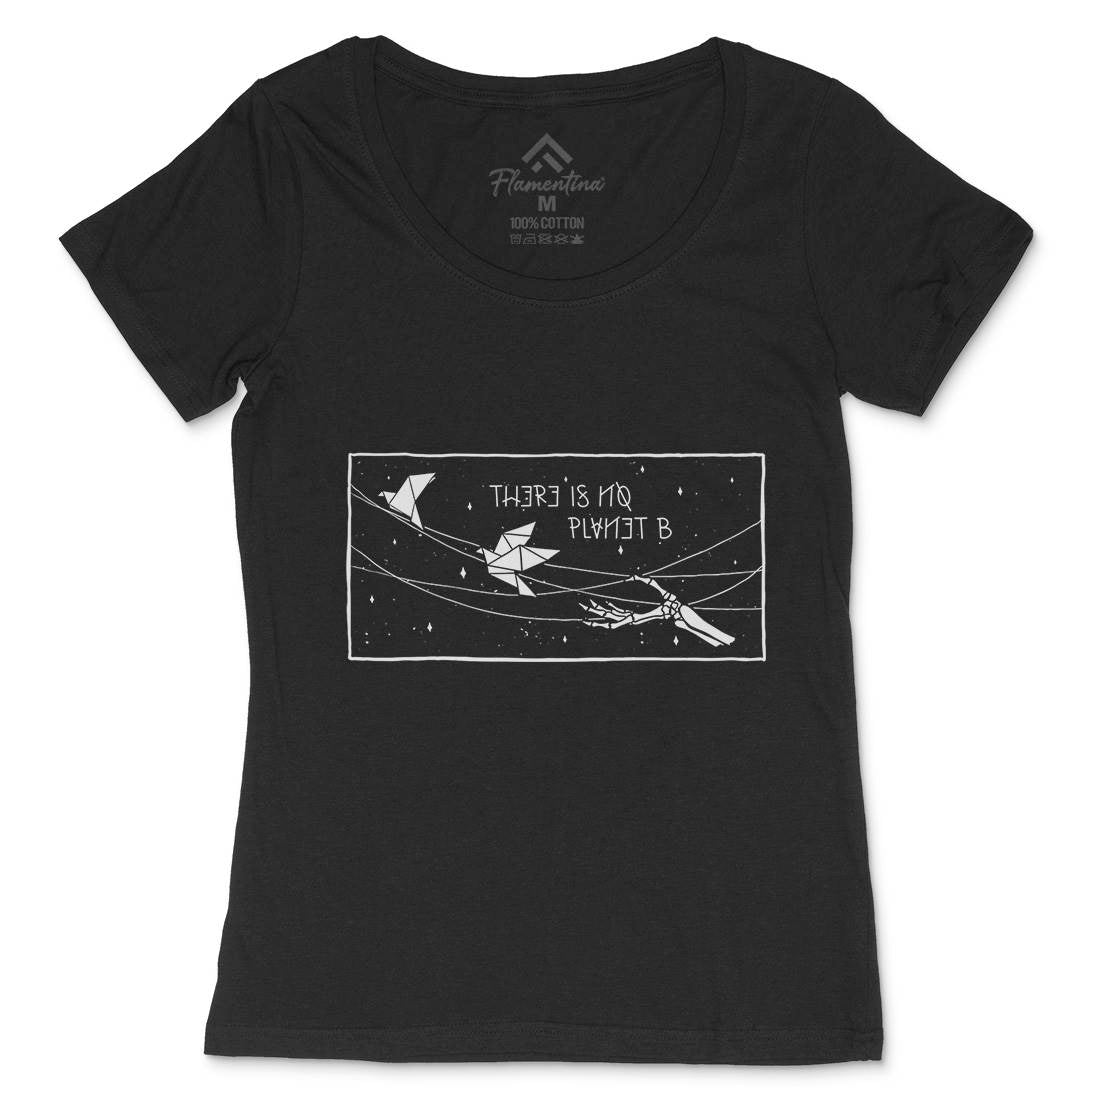 Planet B Womens Scoop Neck T-Shirt Nature D481